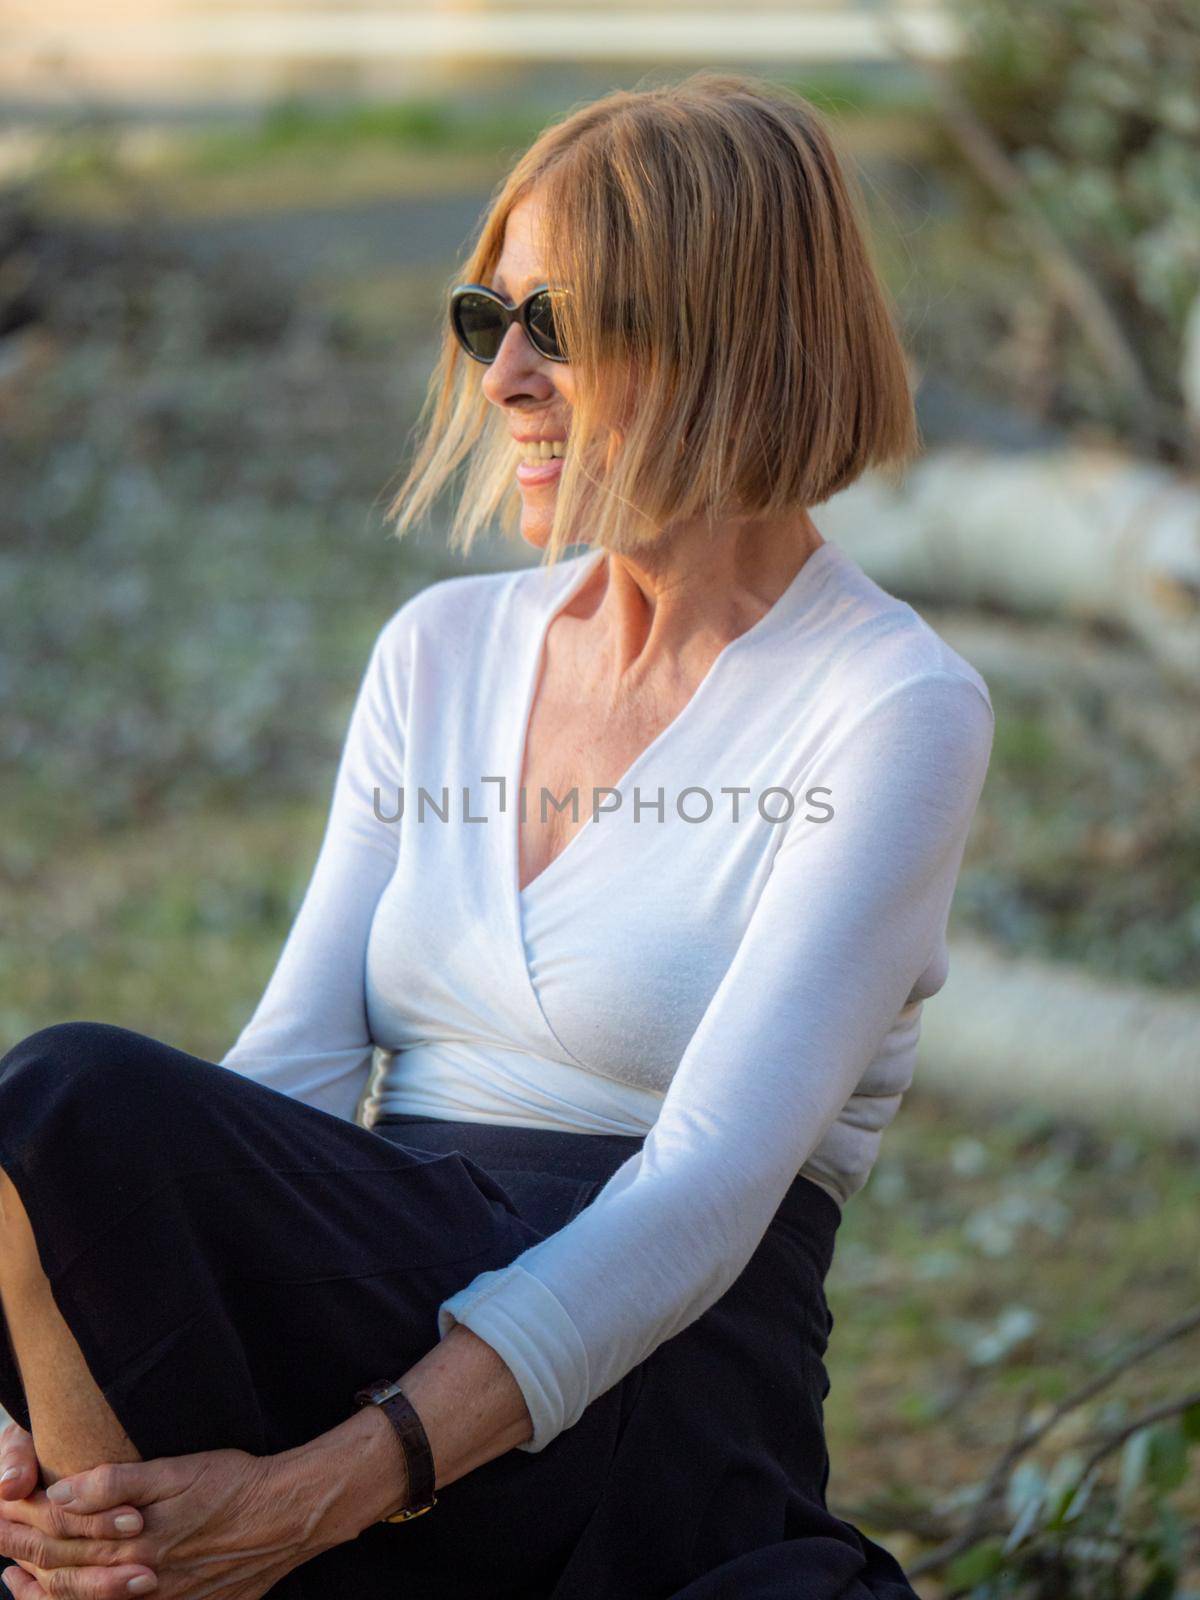 senior fit elegant lady dressed blaka dn white wearing sunglasses enjoying nature in summer